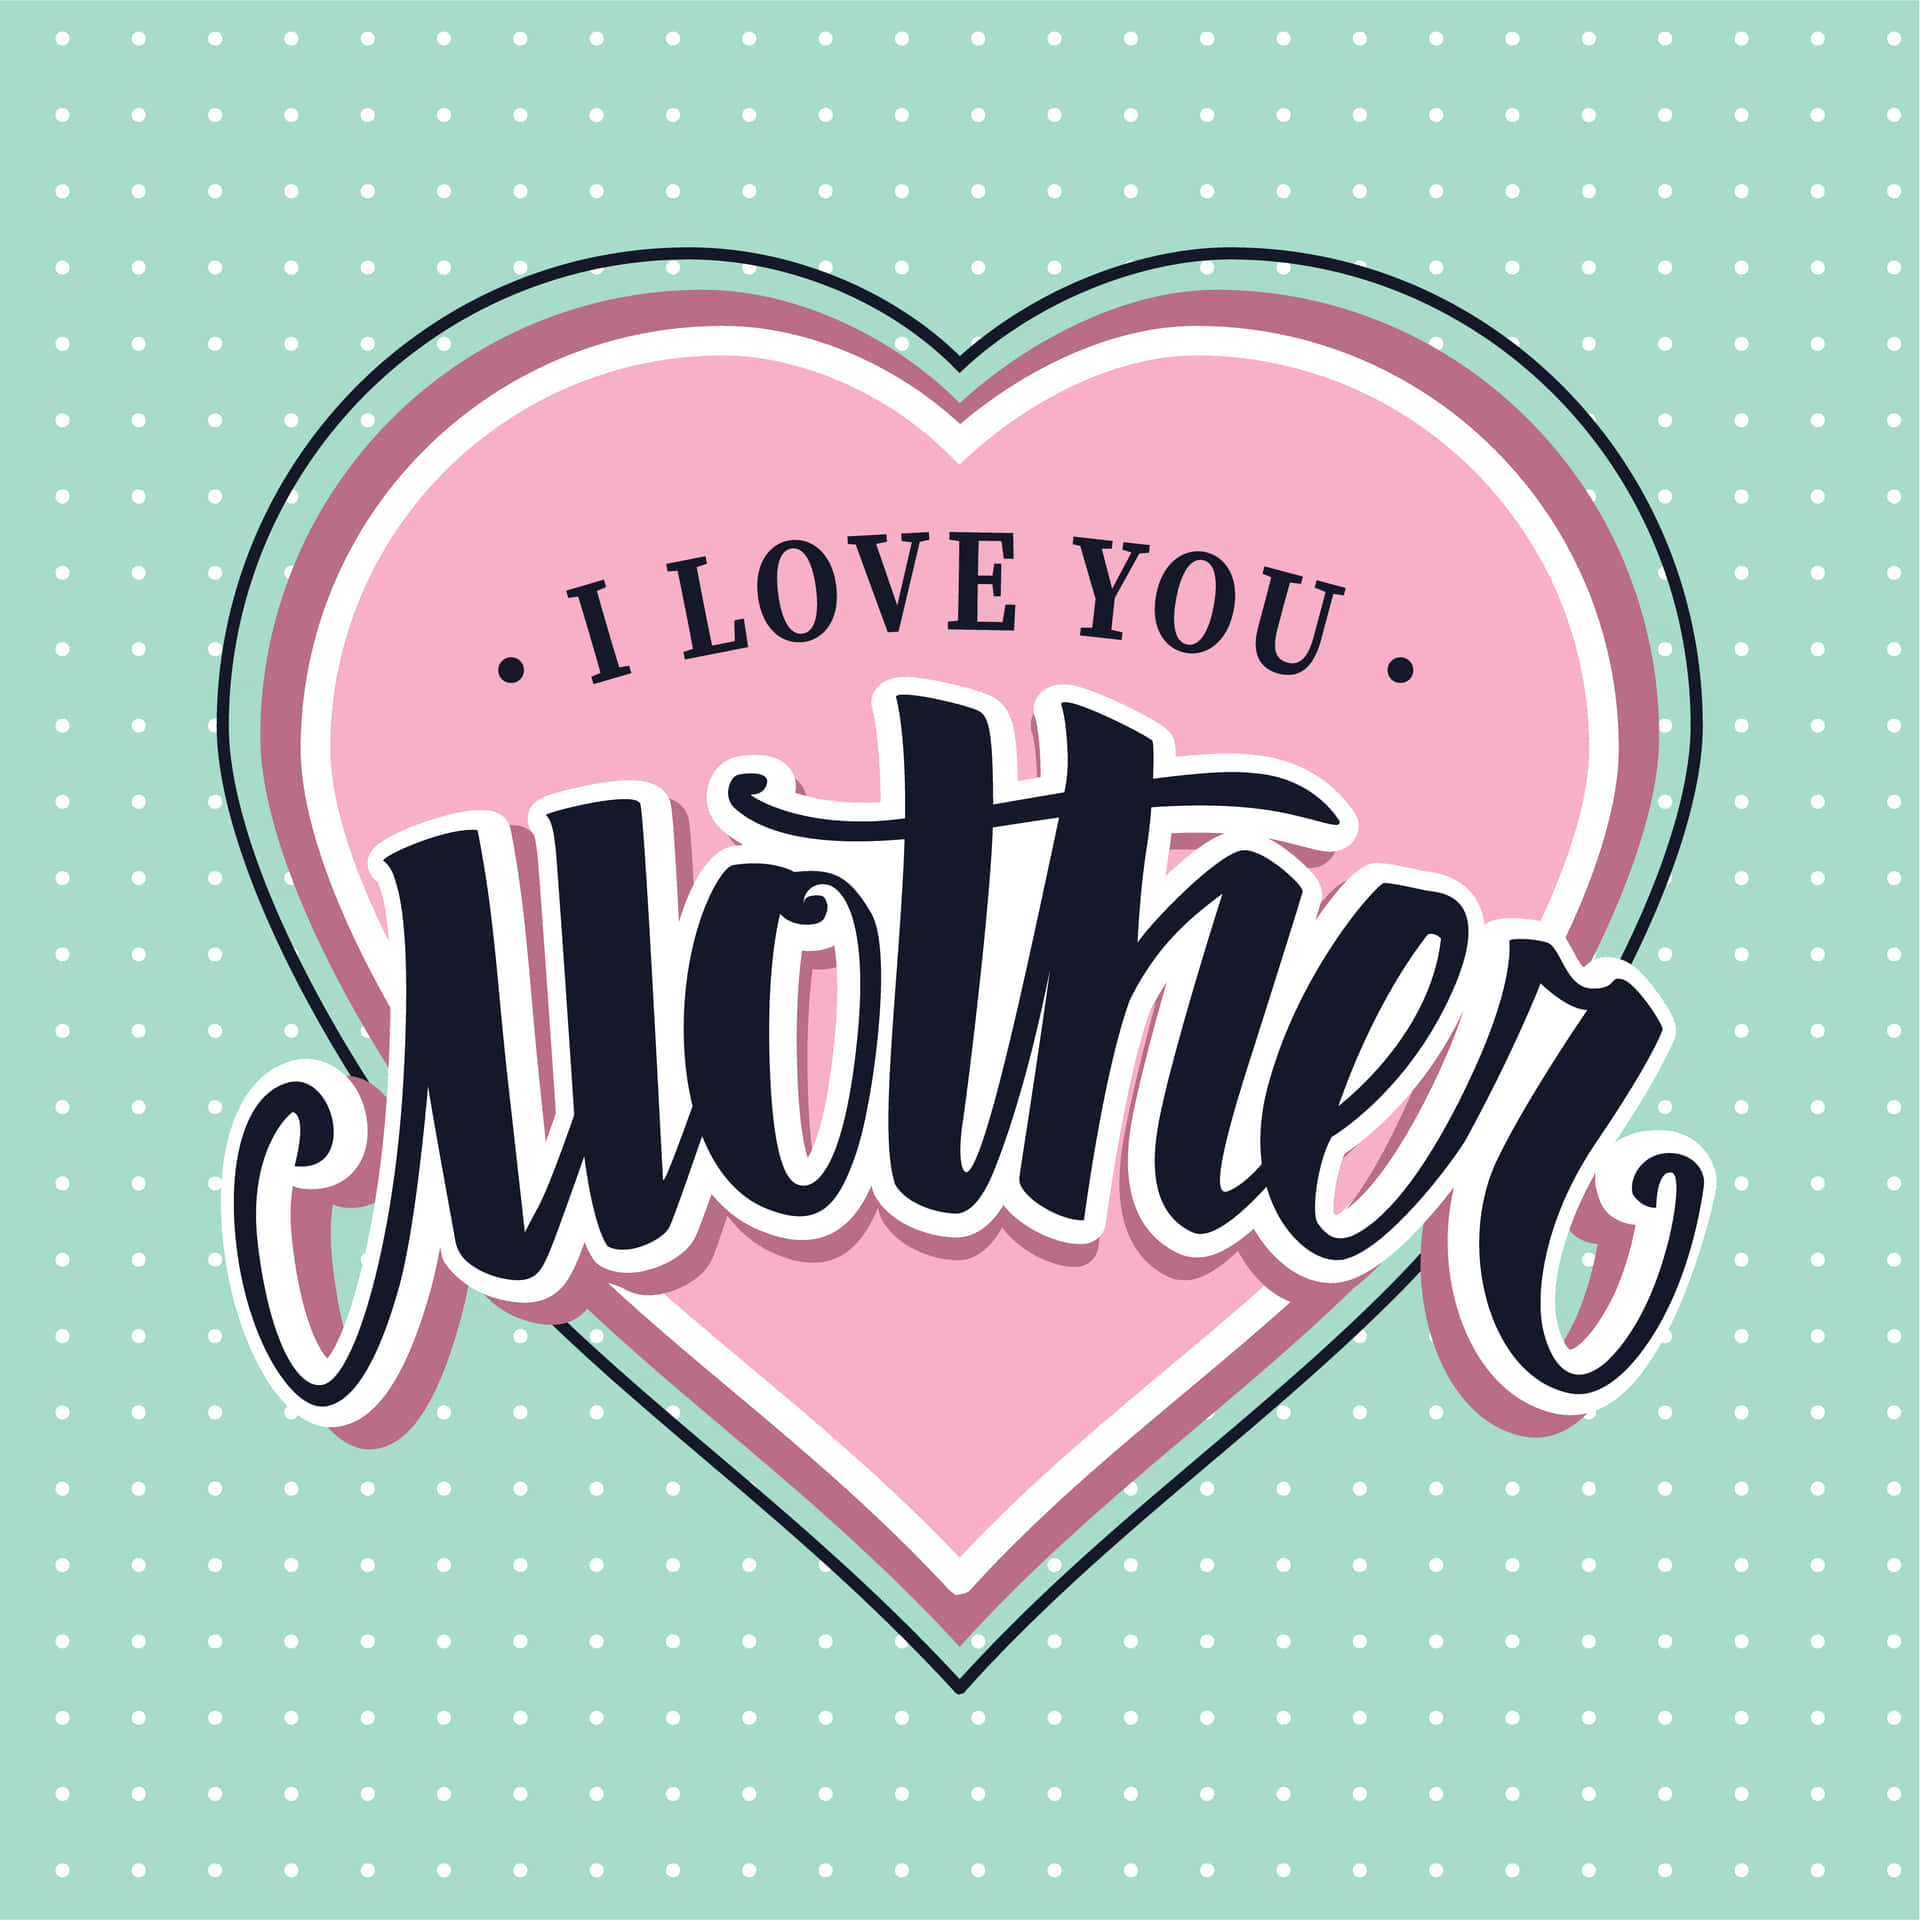 I Love You Mother Heart Illustration Wallpaper